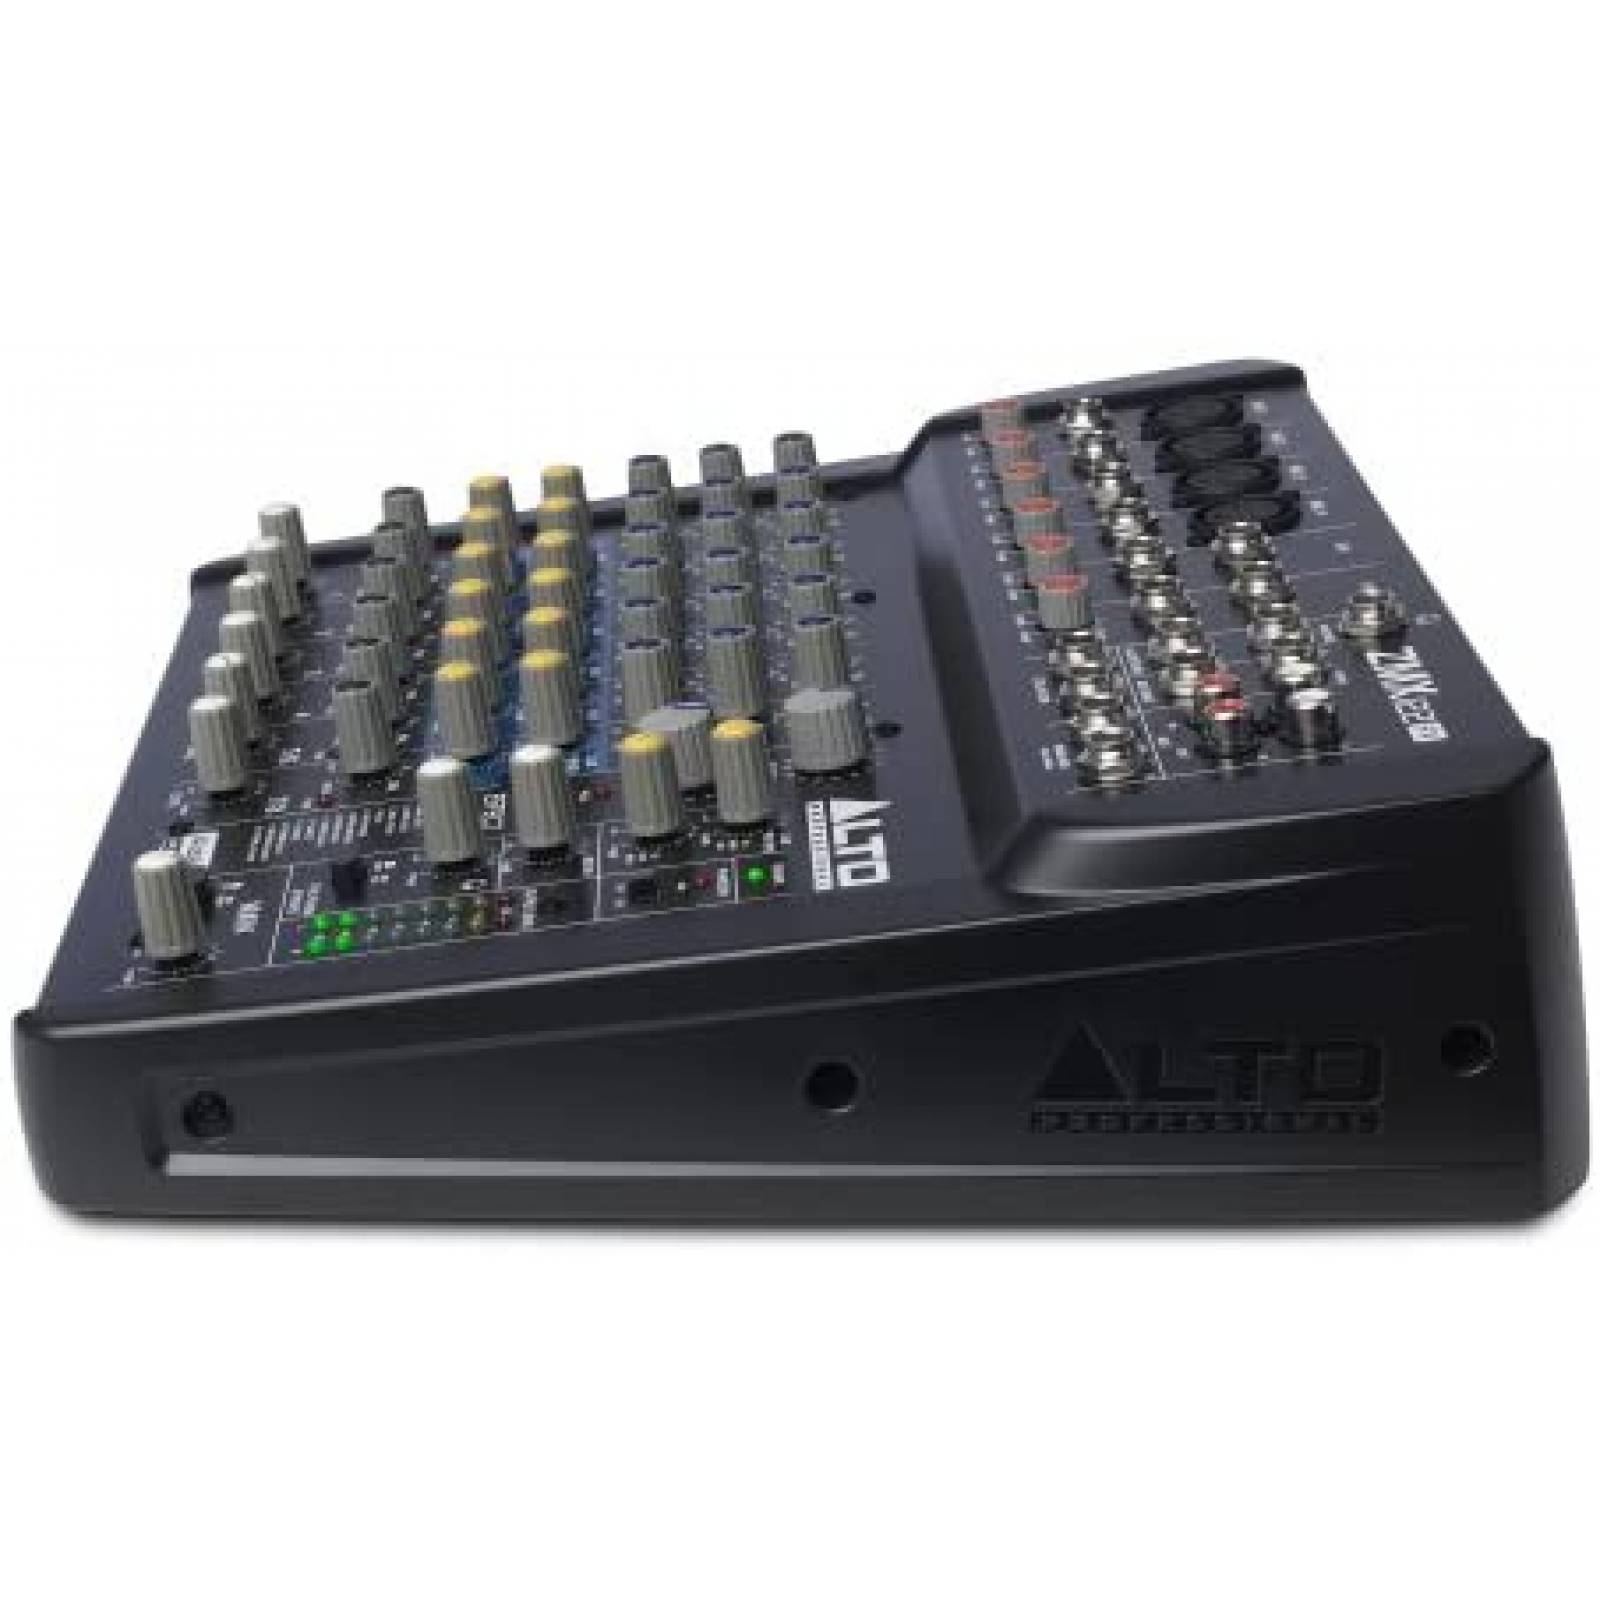 Mezcladora de sonido Alto Professional ZMX122FX 8 canales